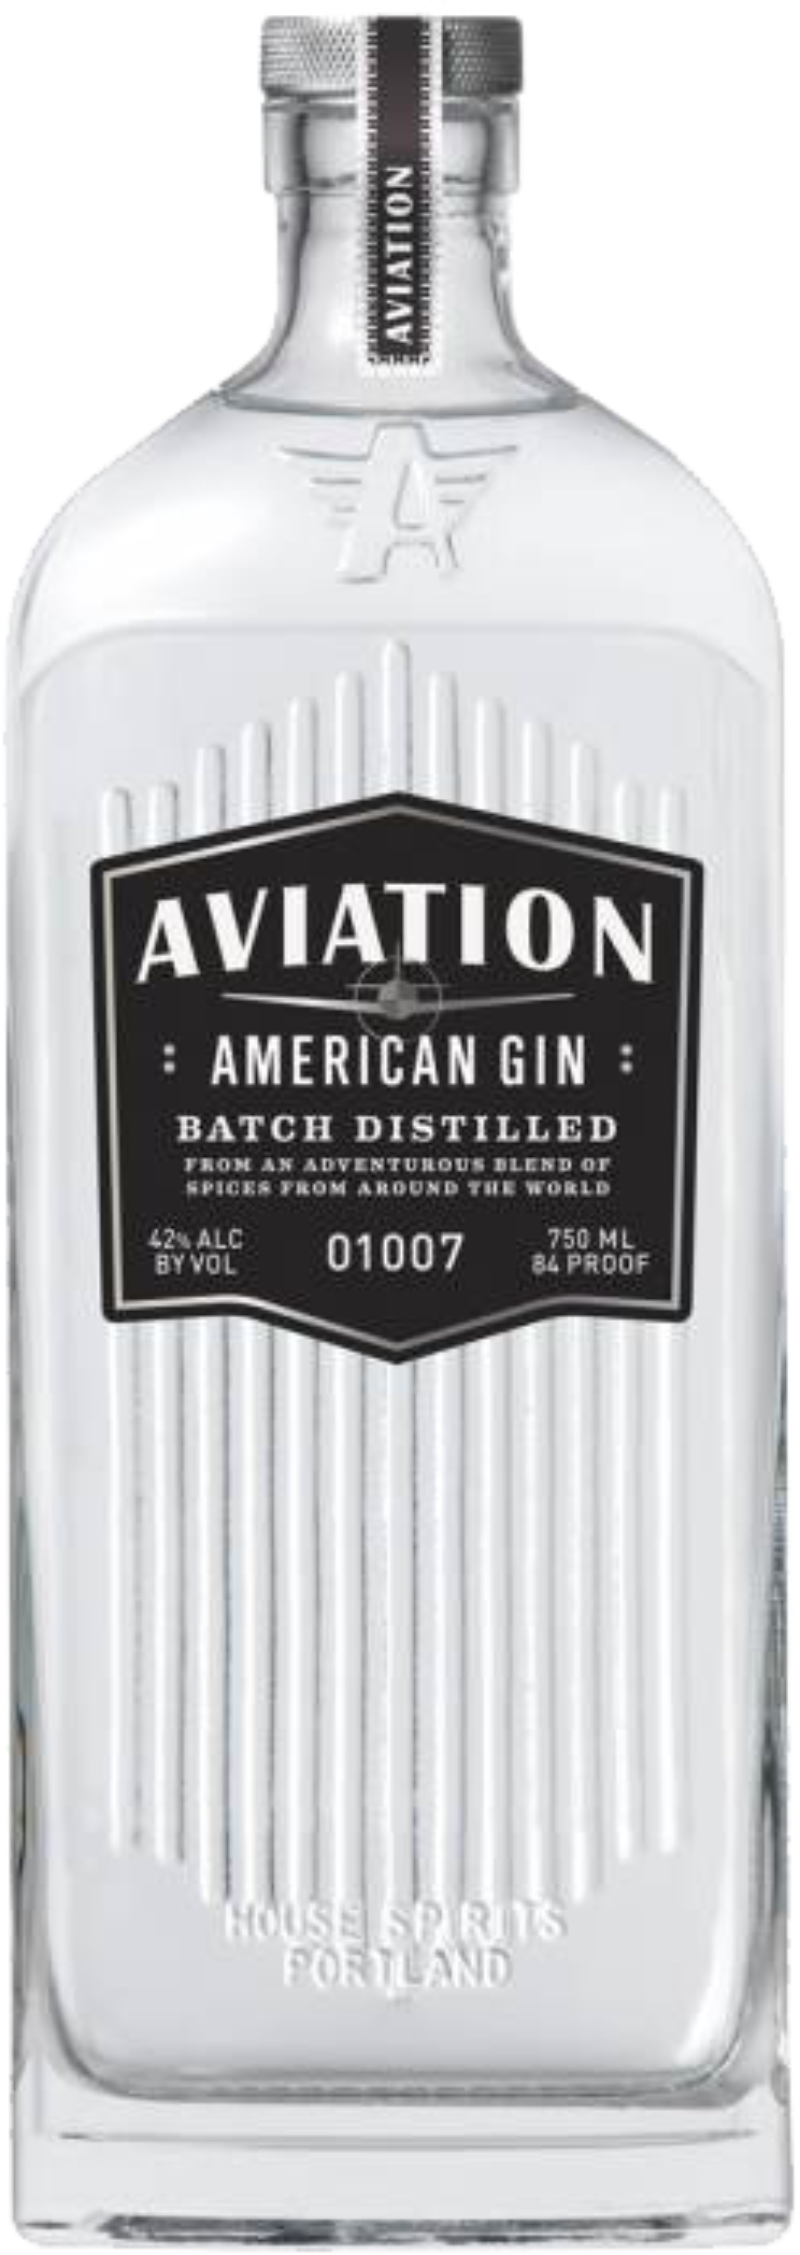 70 Gin 42% cl - vol Aviation